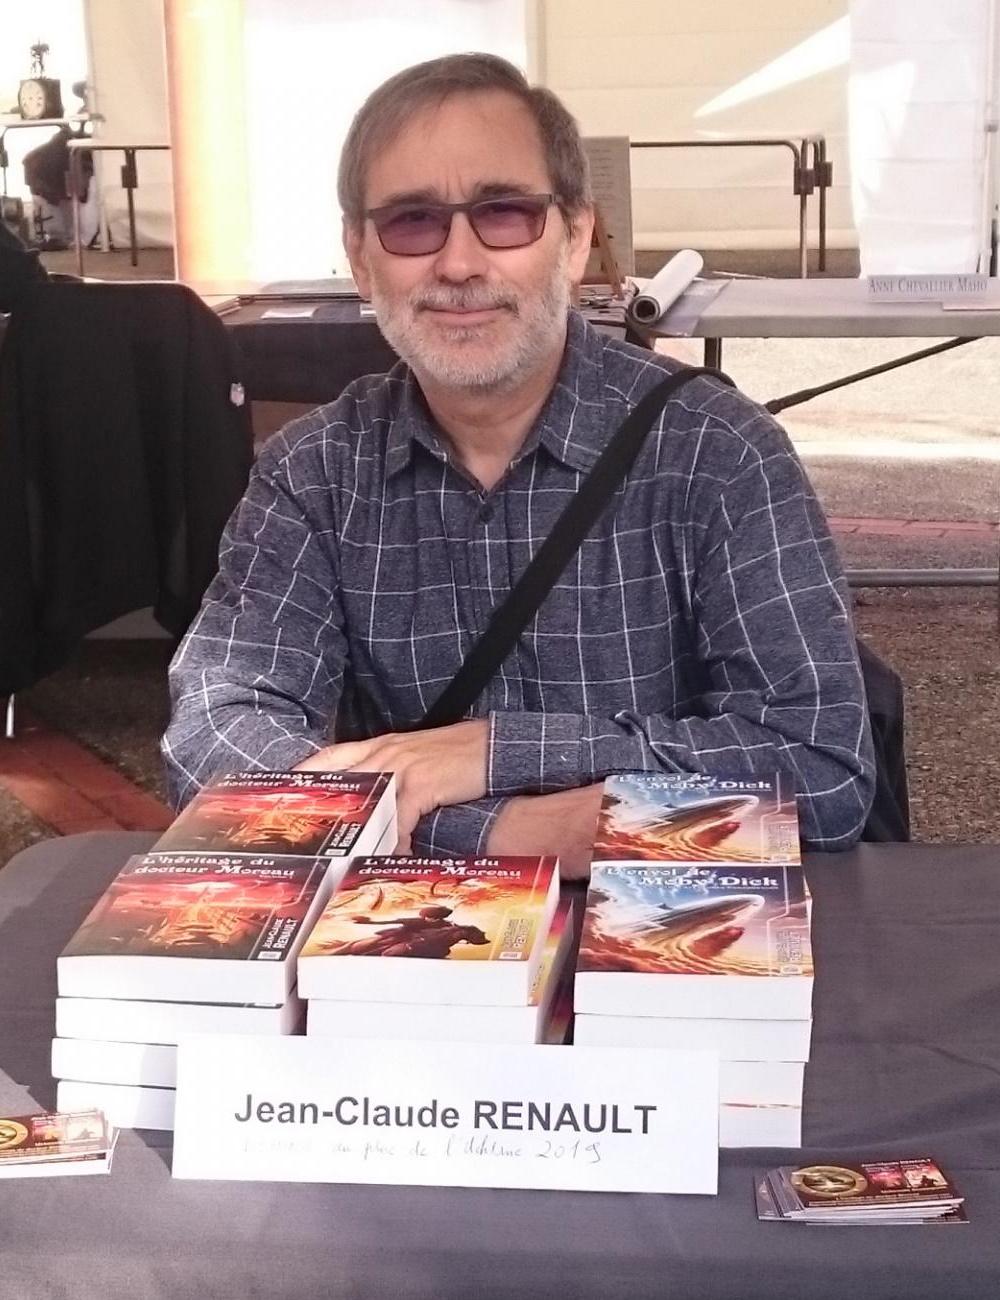 Jean-Claude Renault